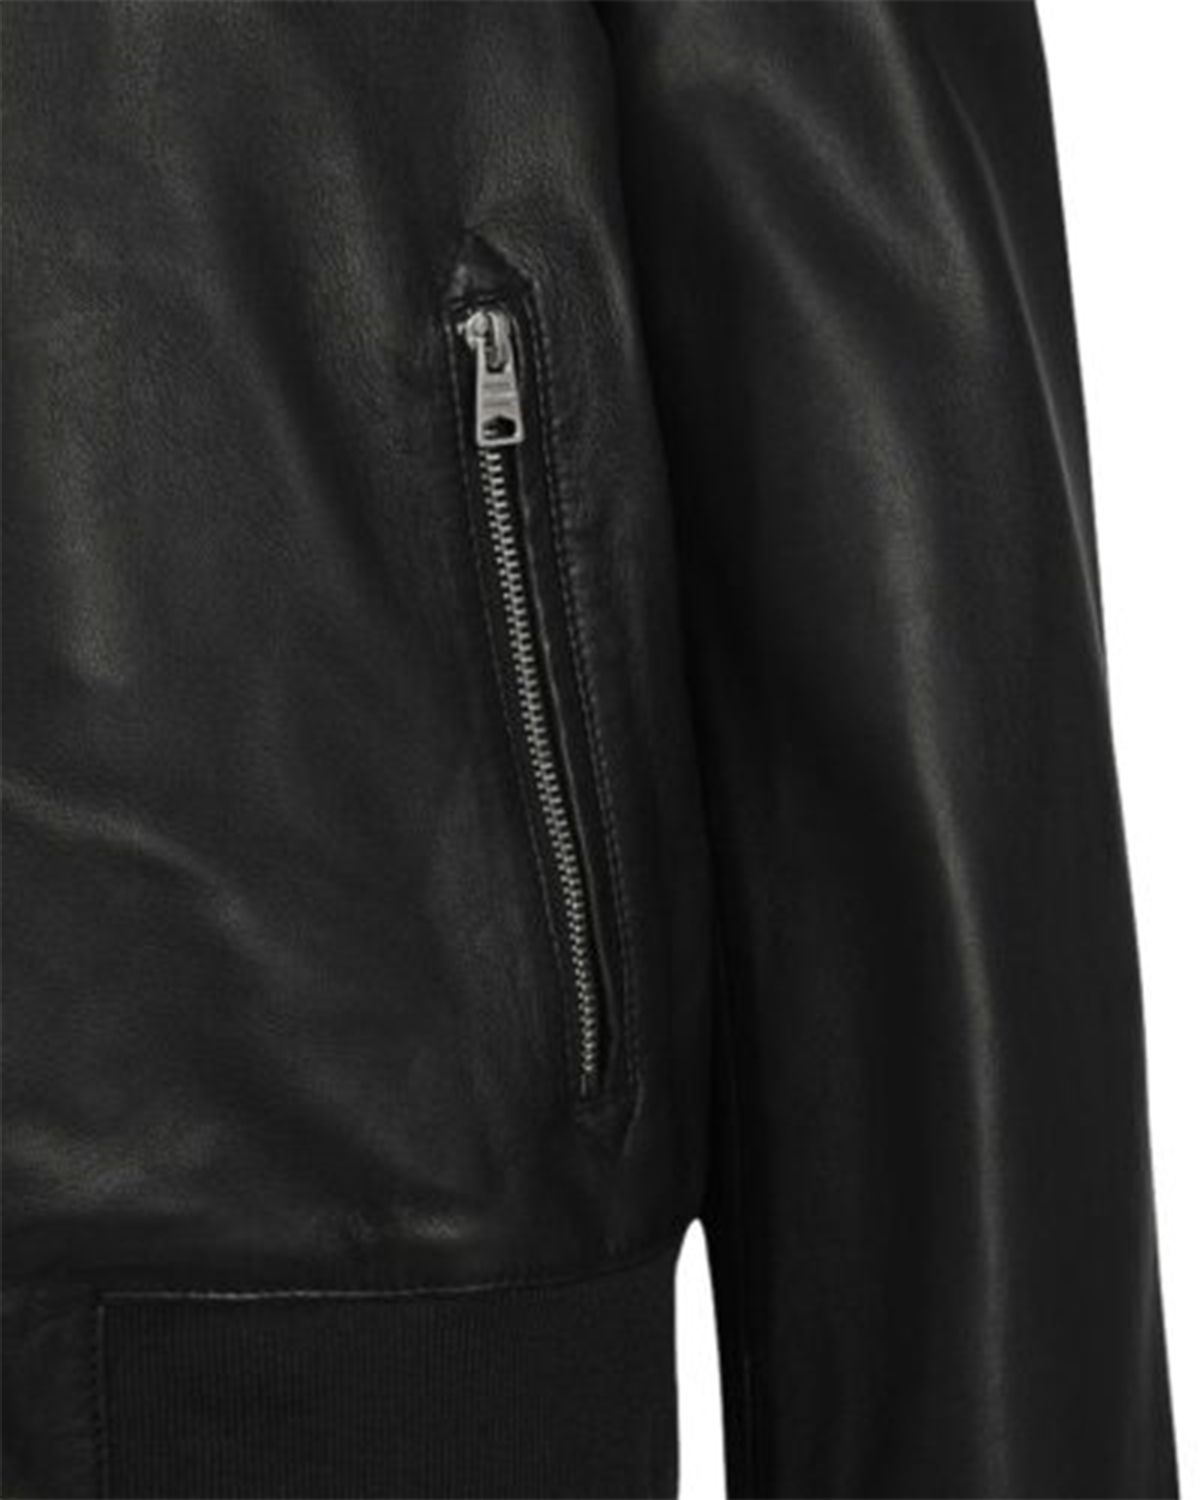 MotorCycleJackets Womens Elegant Black Bomber Leather Jacket